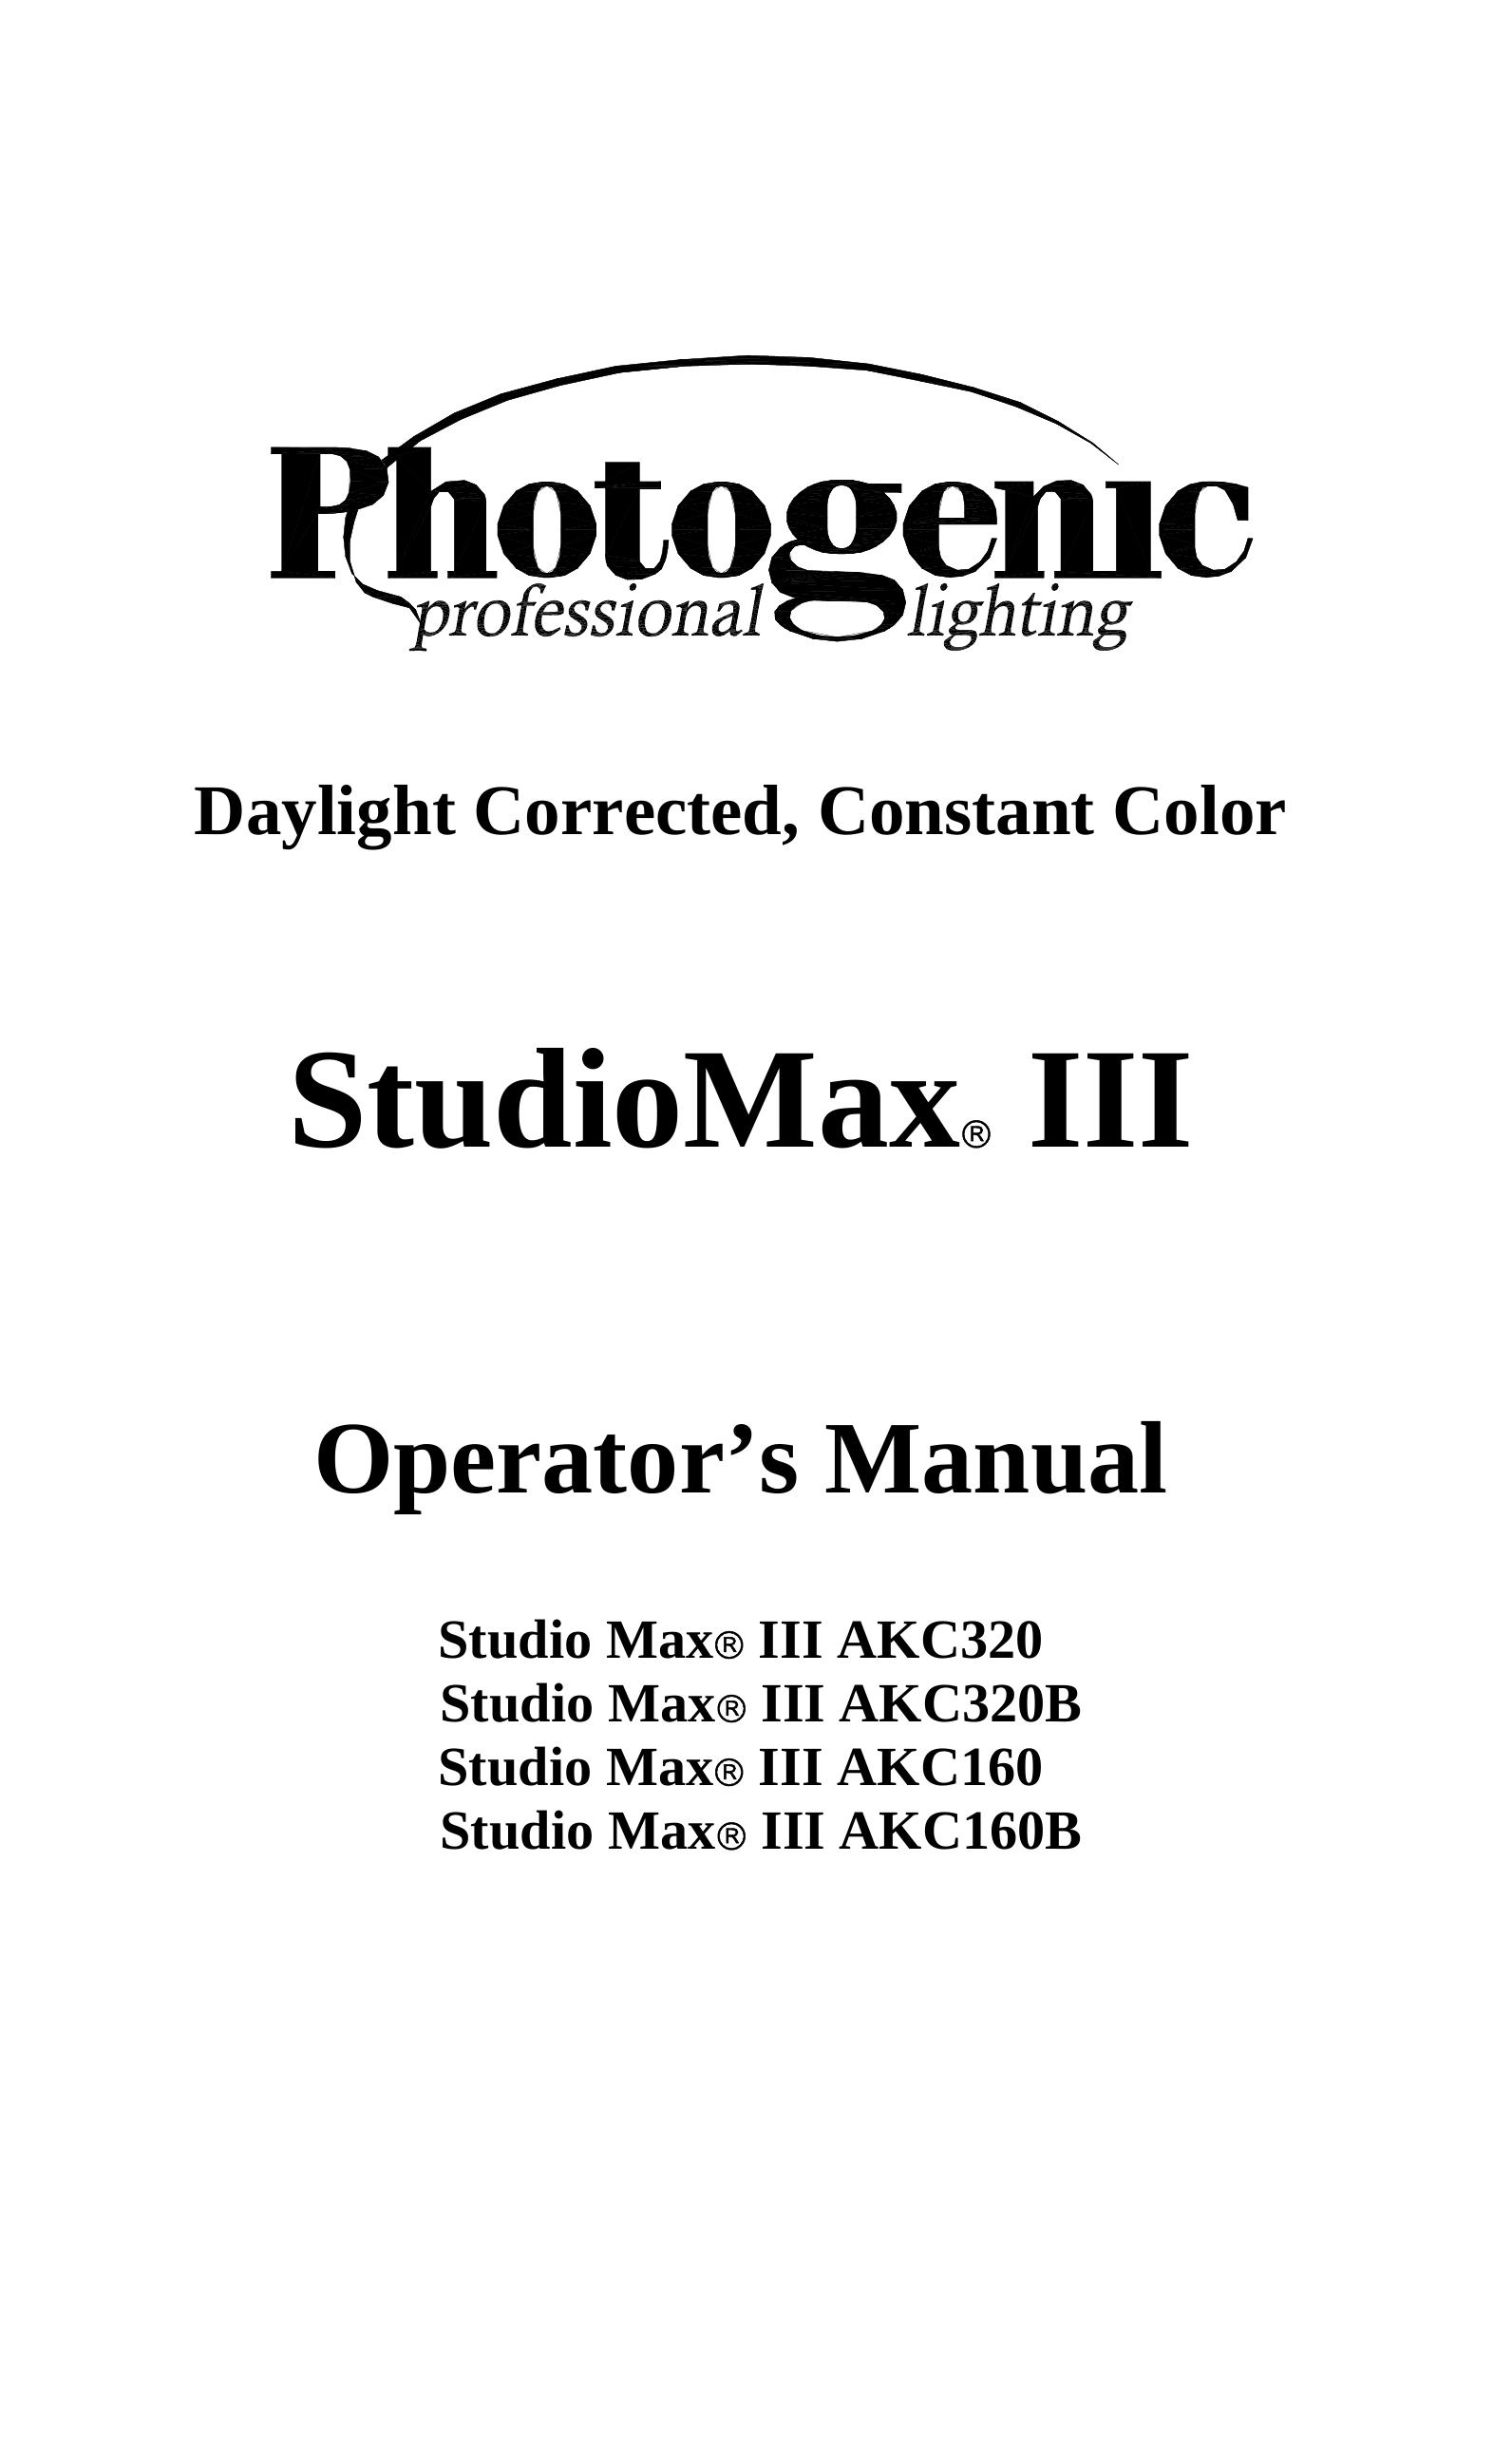 Photogenic Professional Lighting AKC160B Camera Flash User Manual